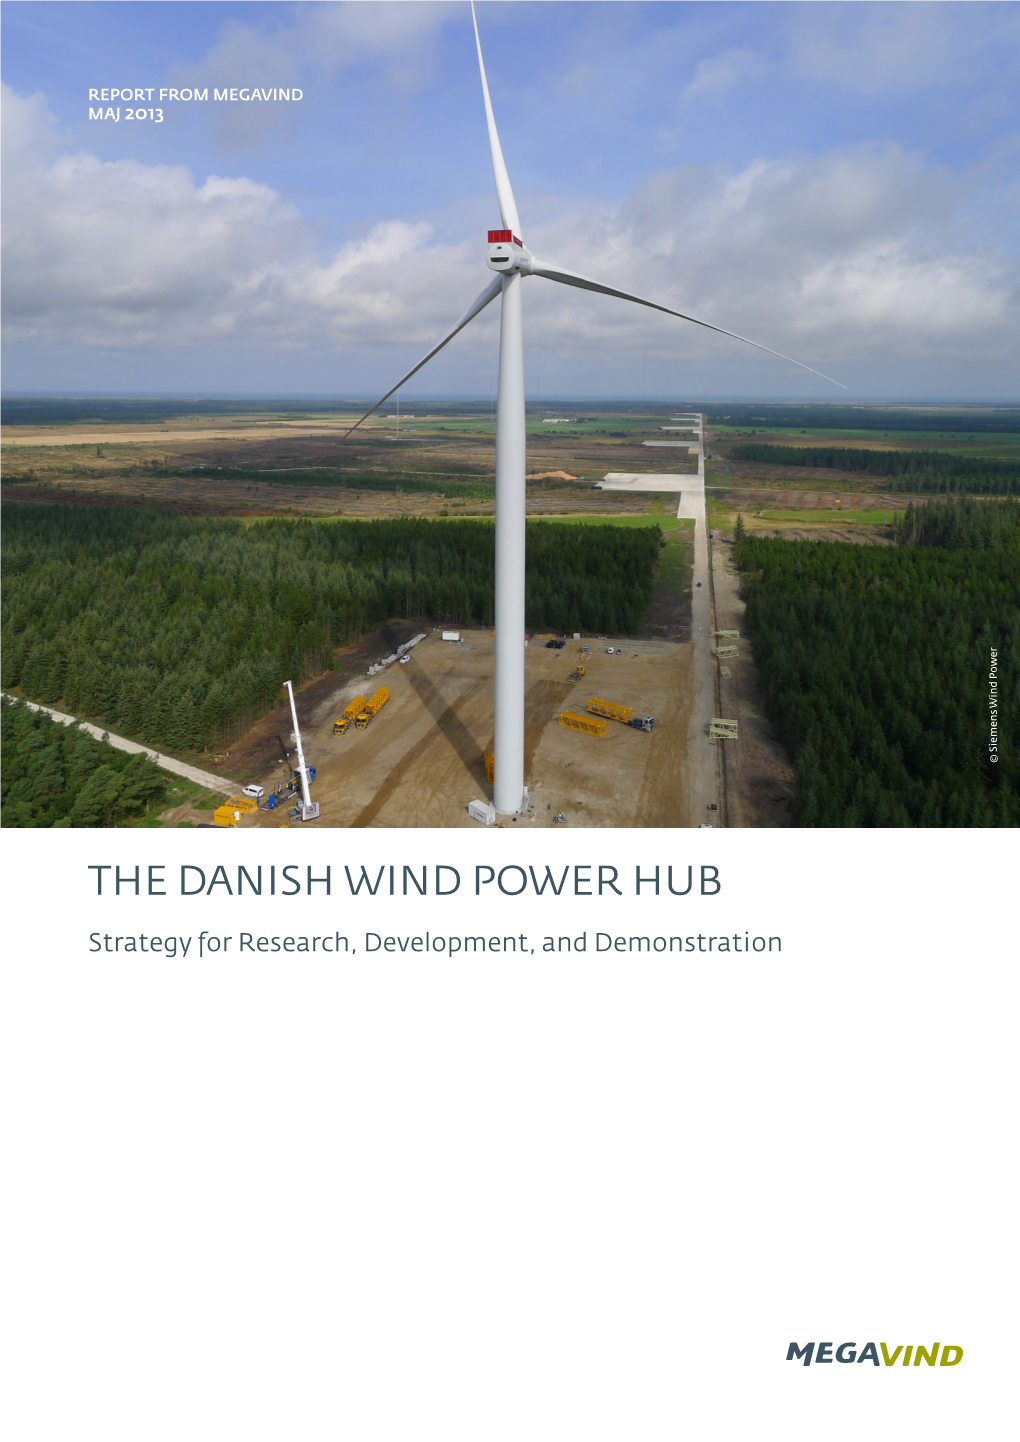 The Danish Wind Power Hub